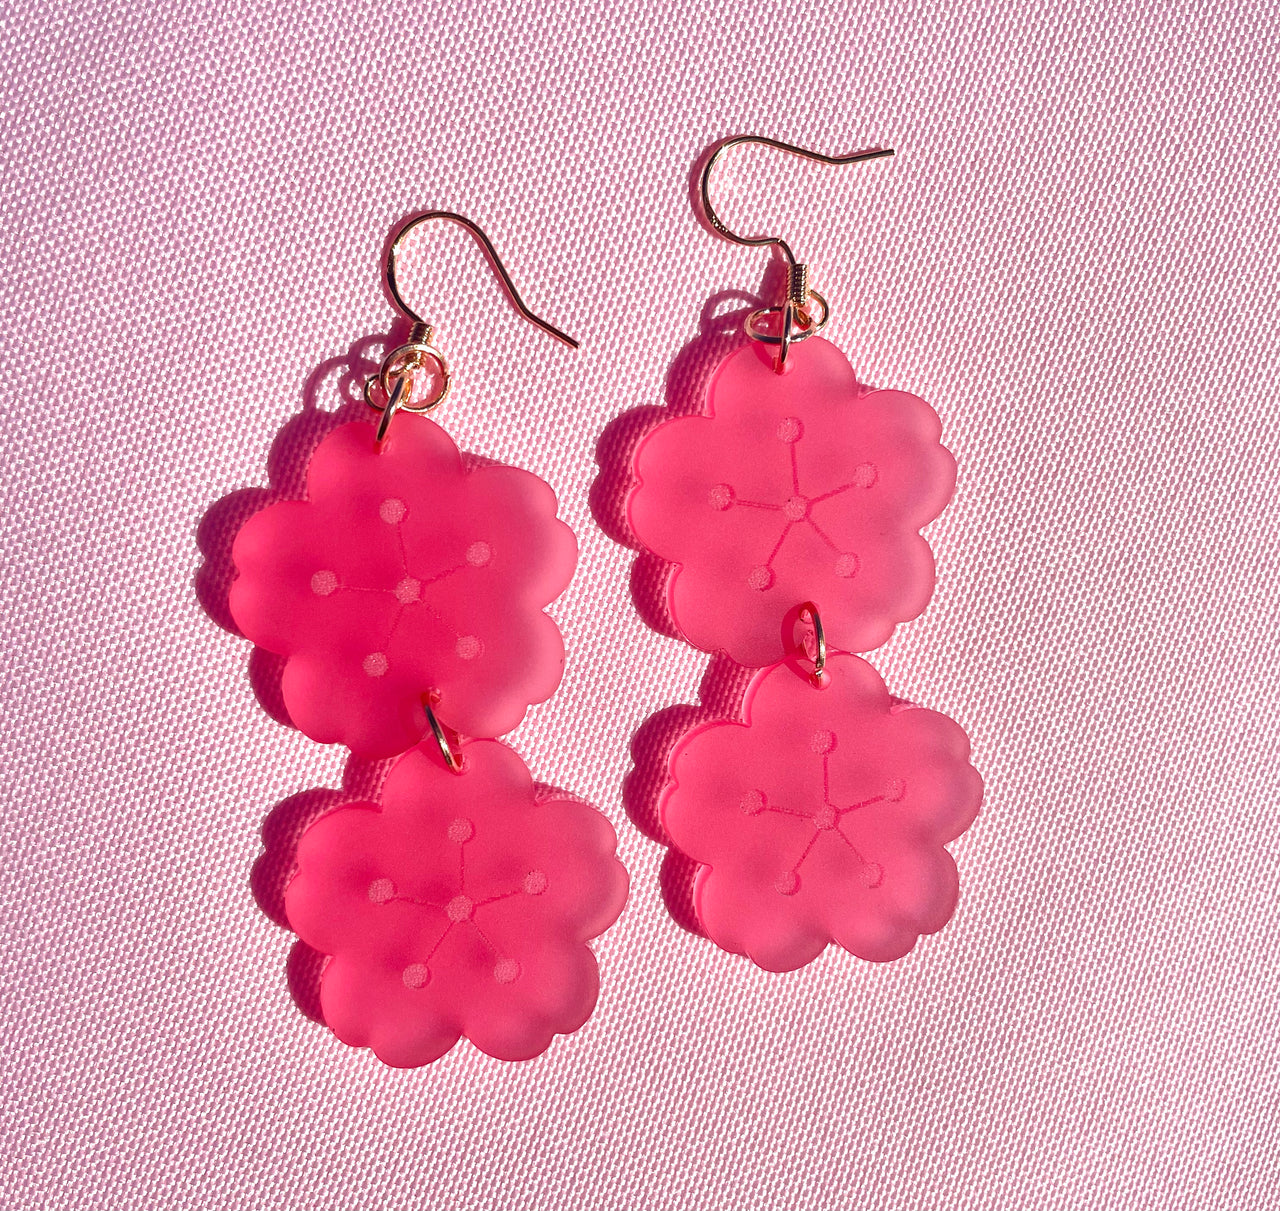 Pink cherry blossom earrings